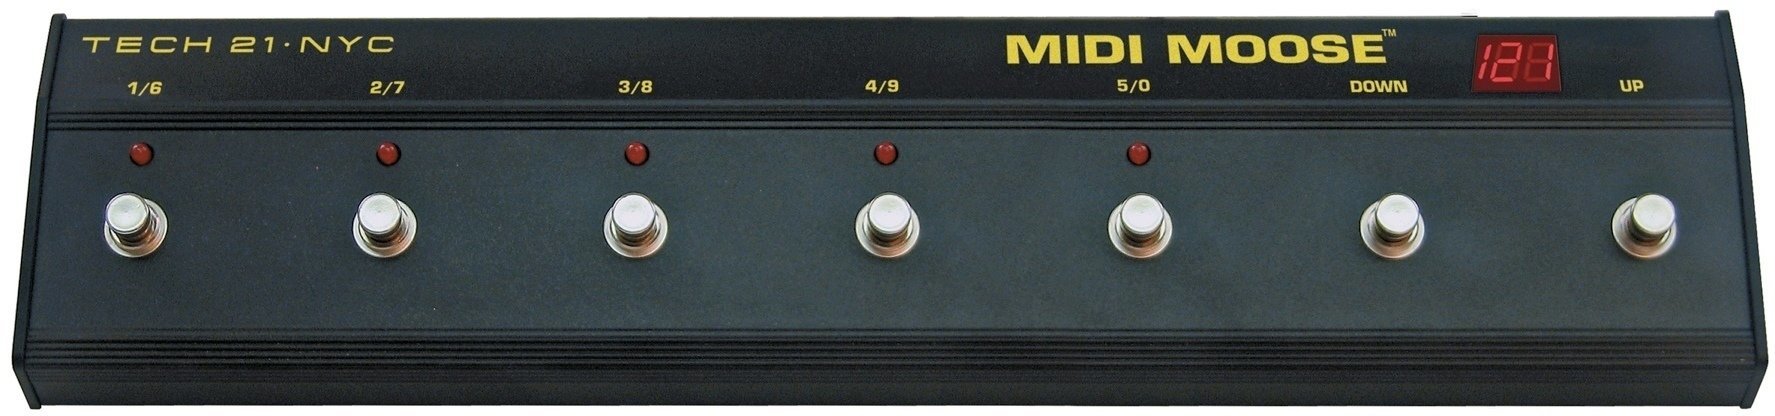 Contrôleur MIDI Tech 21 MIDI Moose